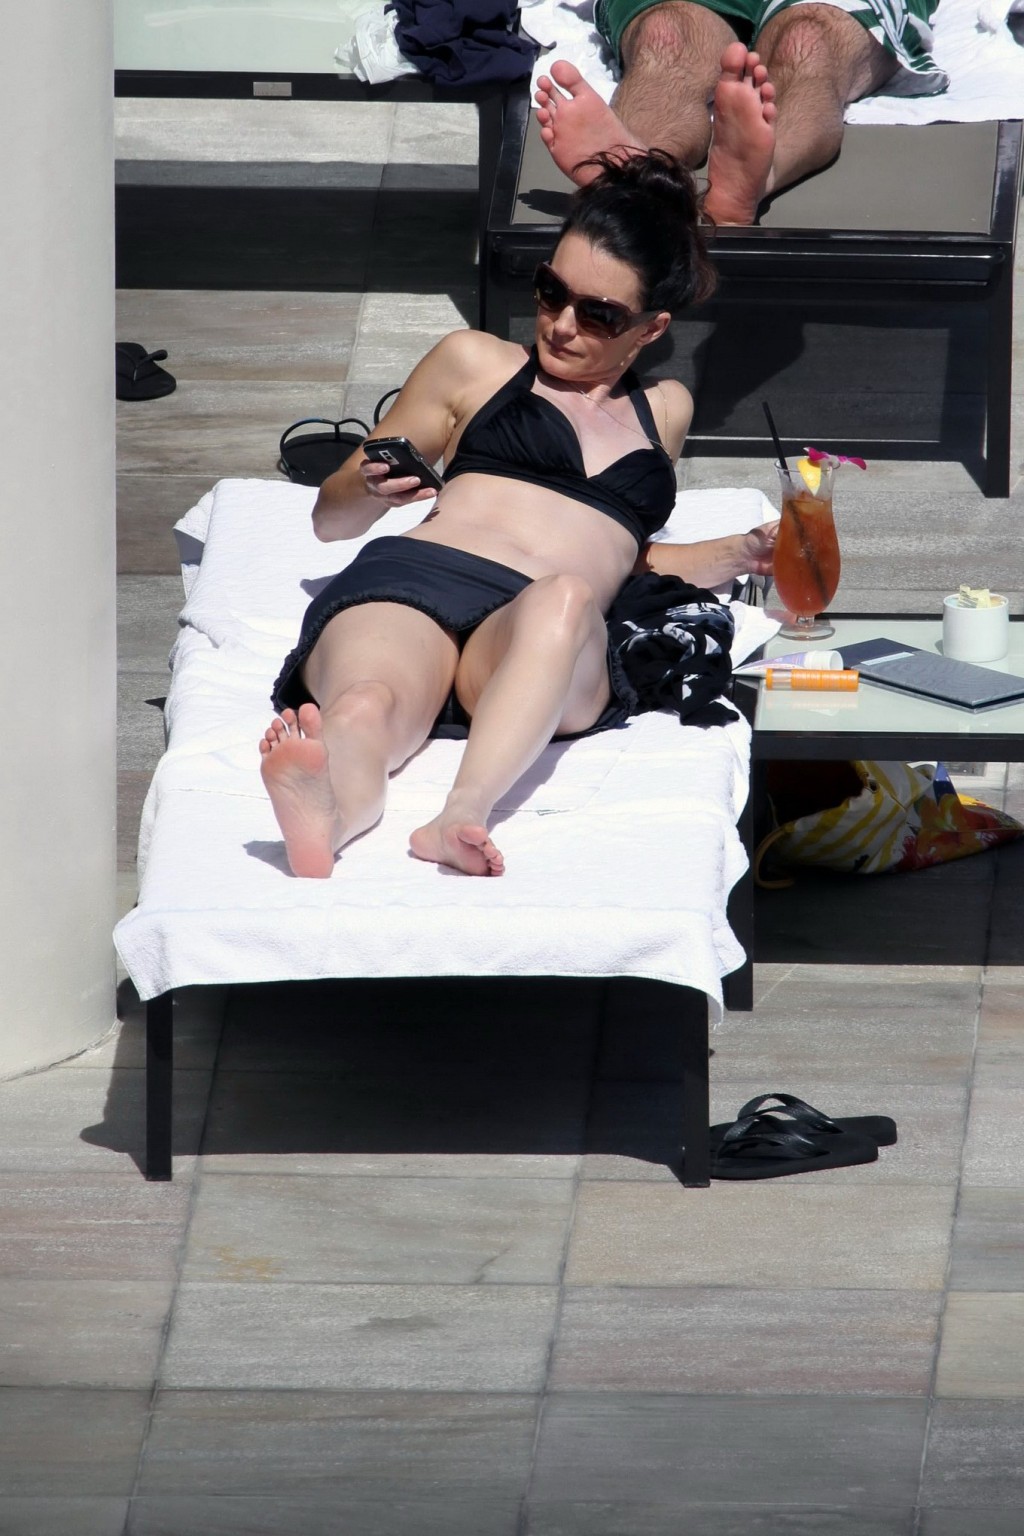 Kristin davis en bikini negro con minifalda bronceandose en la piscina en hawaii
 #75328996